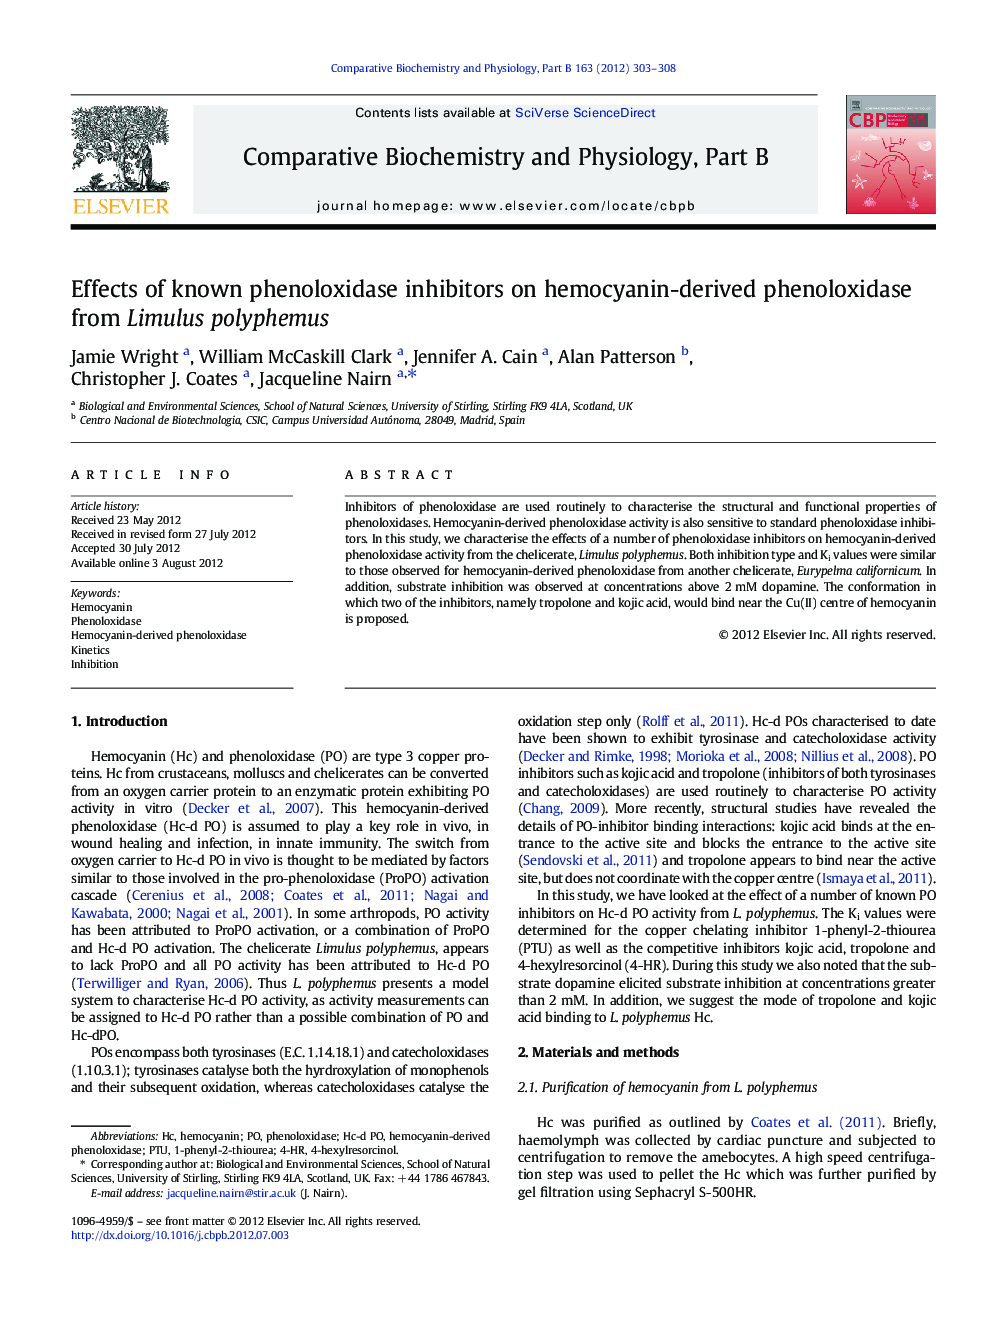 Effects of known phenoloxidase inhibitors on hemocyanin-derived phenoloxidase from Limulus polyphemus